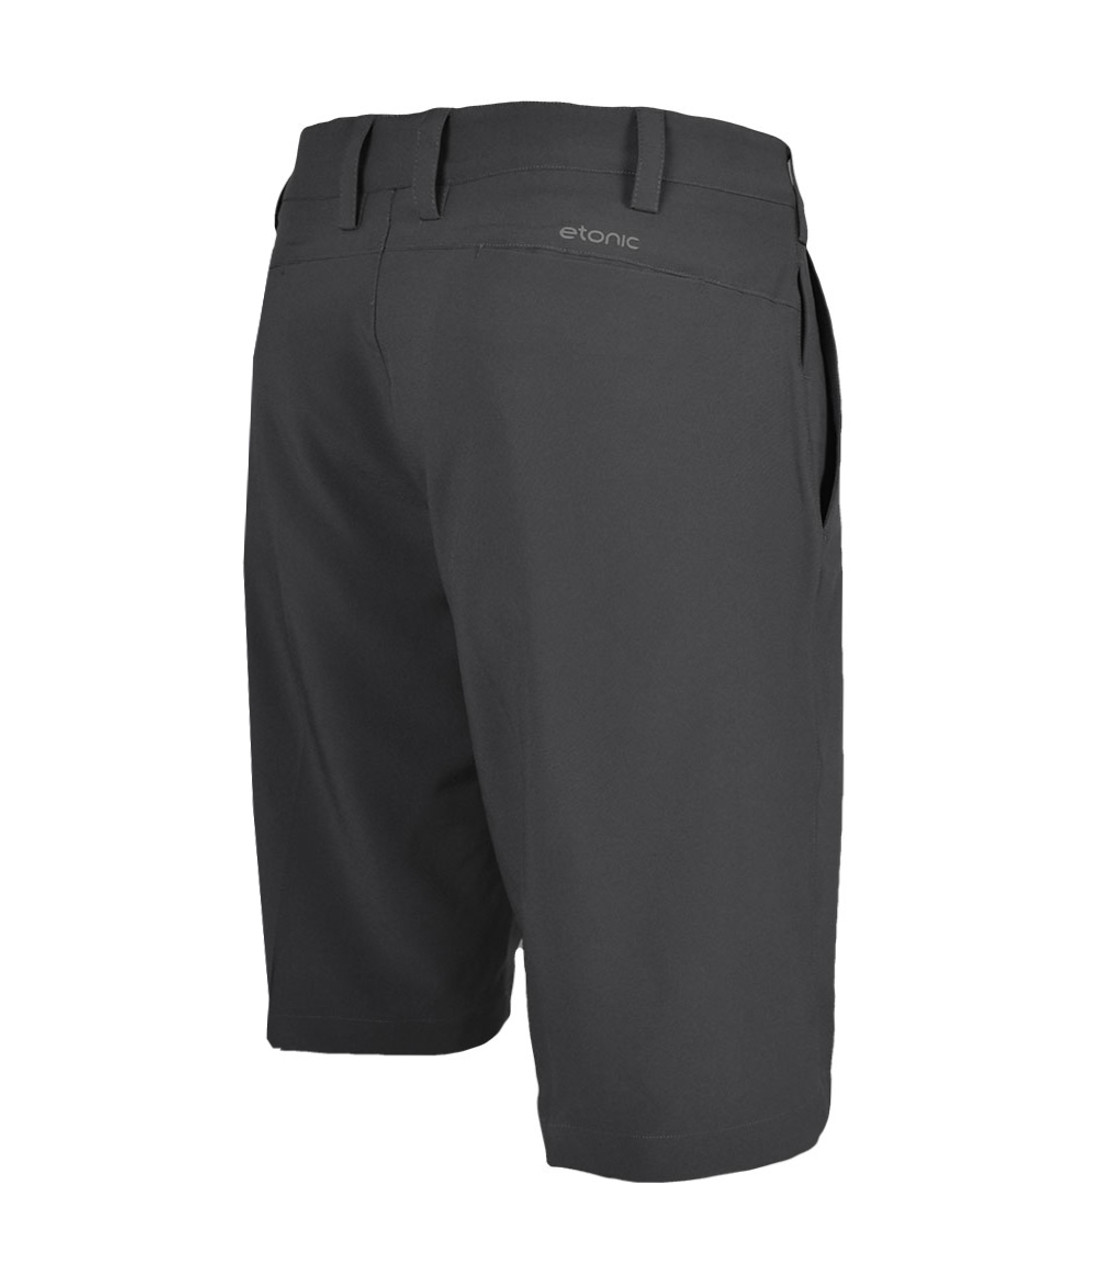 Etonic Golf Performance Core Shorts | RockBottomGolf.com